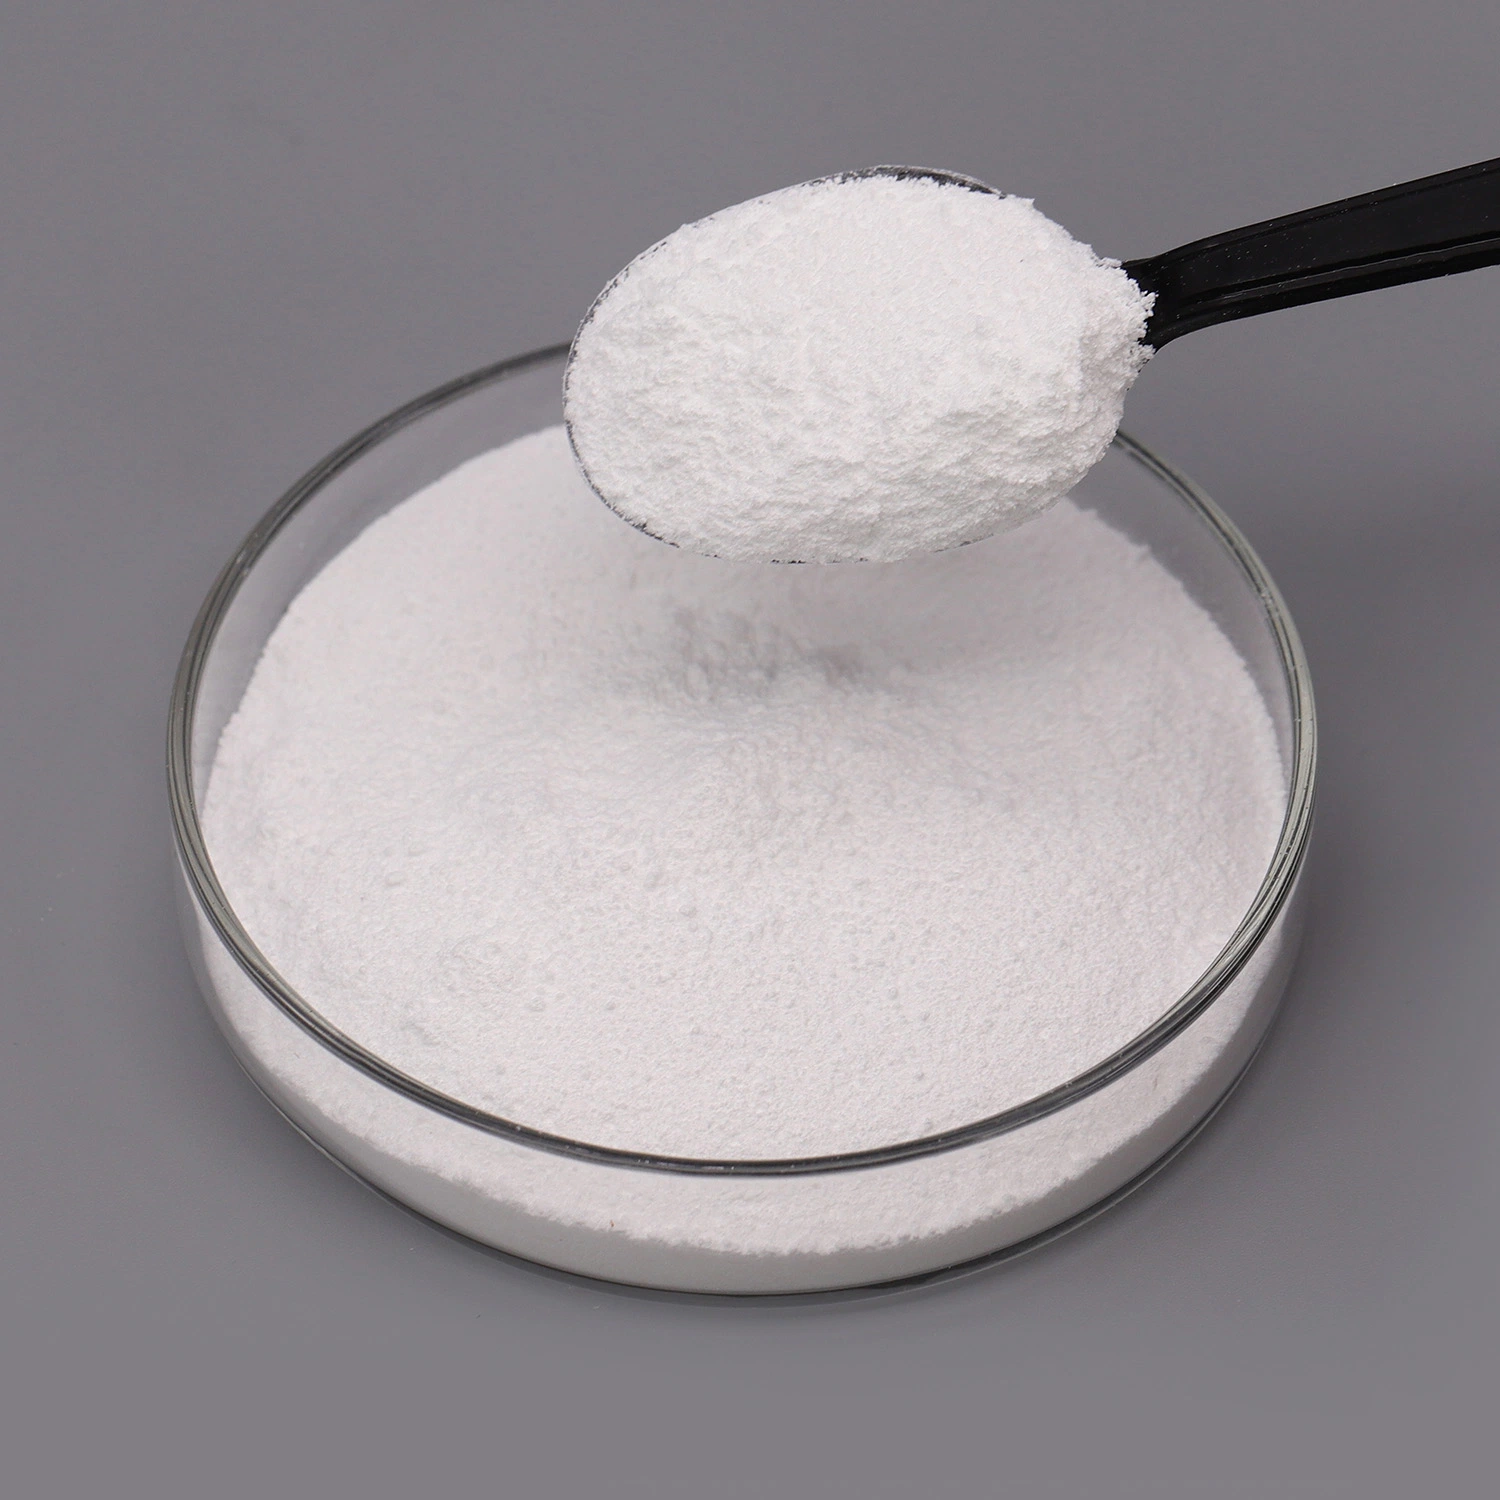 Materia prima orgánica natural Productos químicos Benzeno de sodio polvo